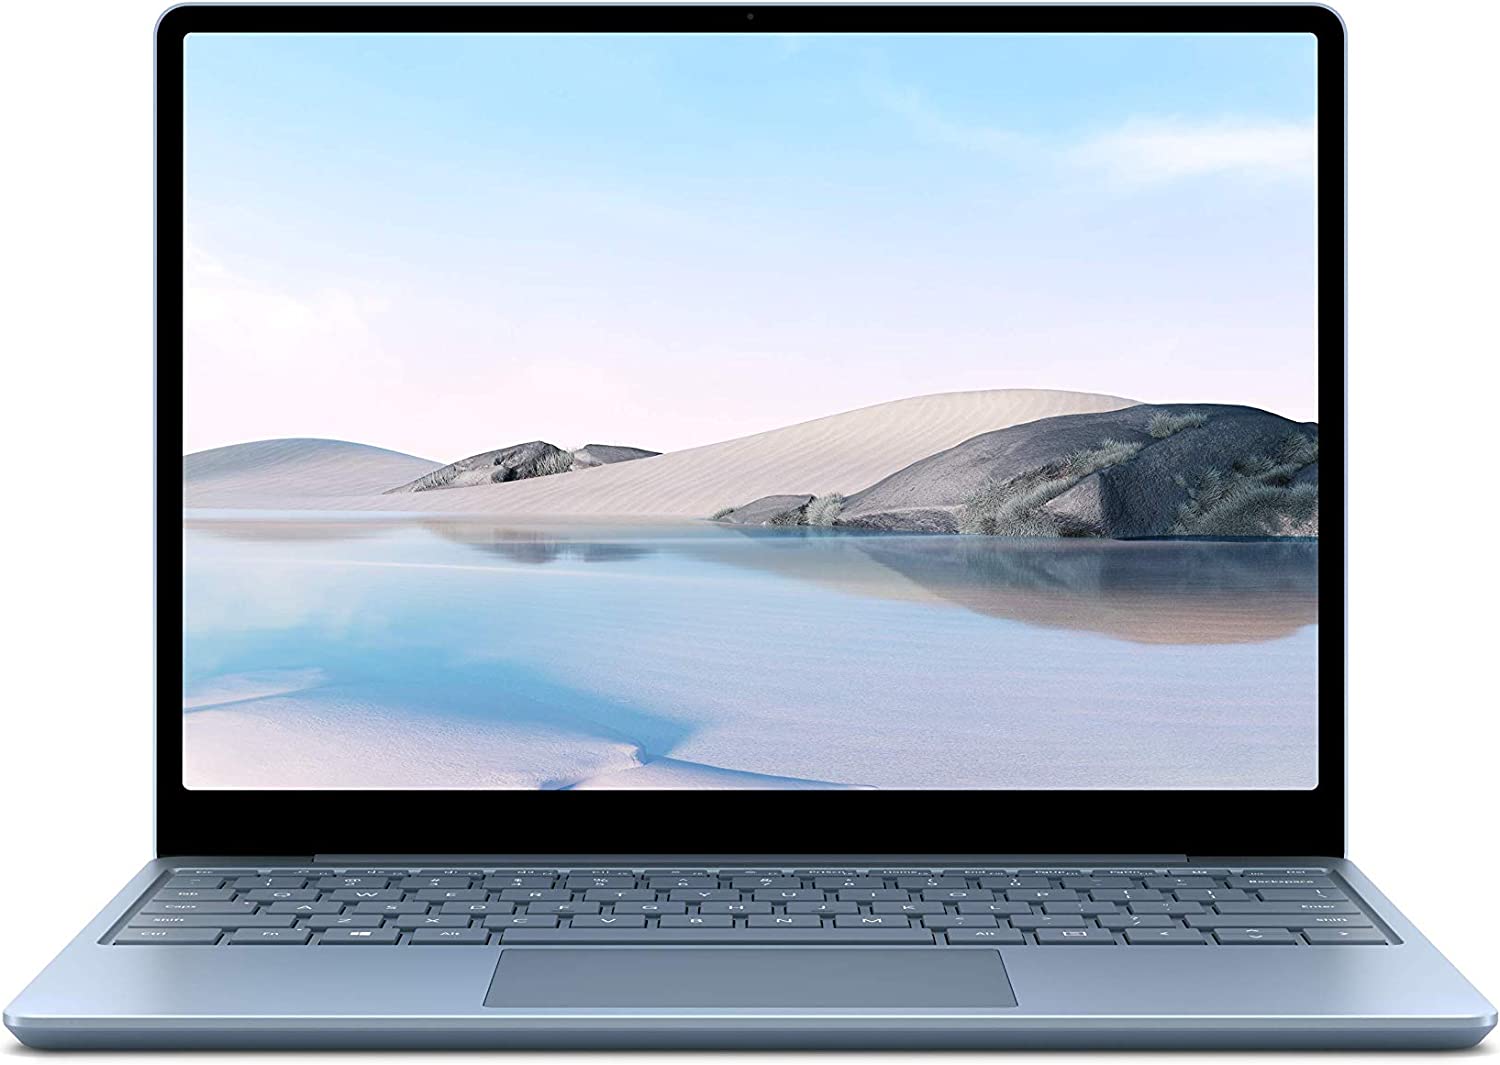 Surface Laptop i5 8G 256G office2016